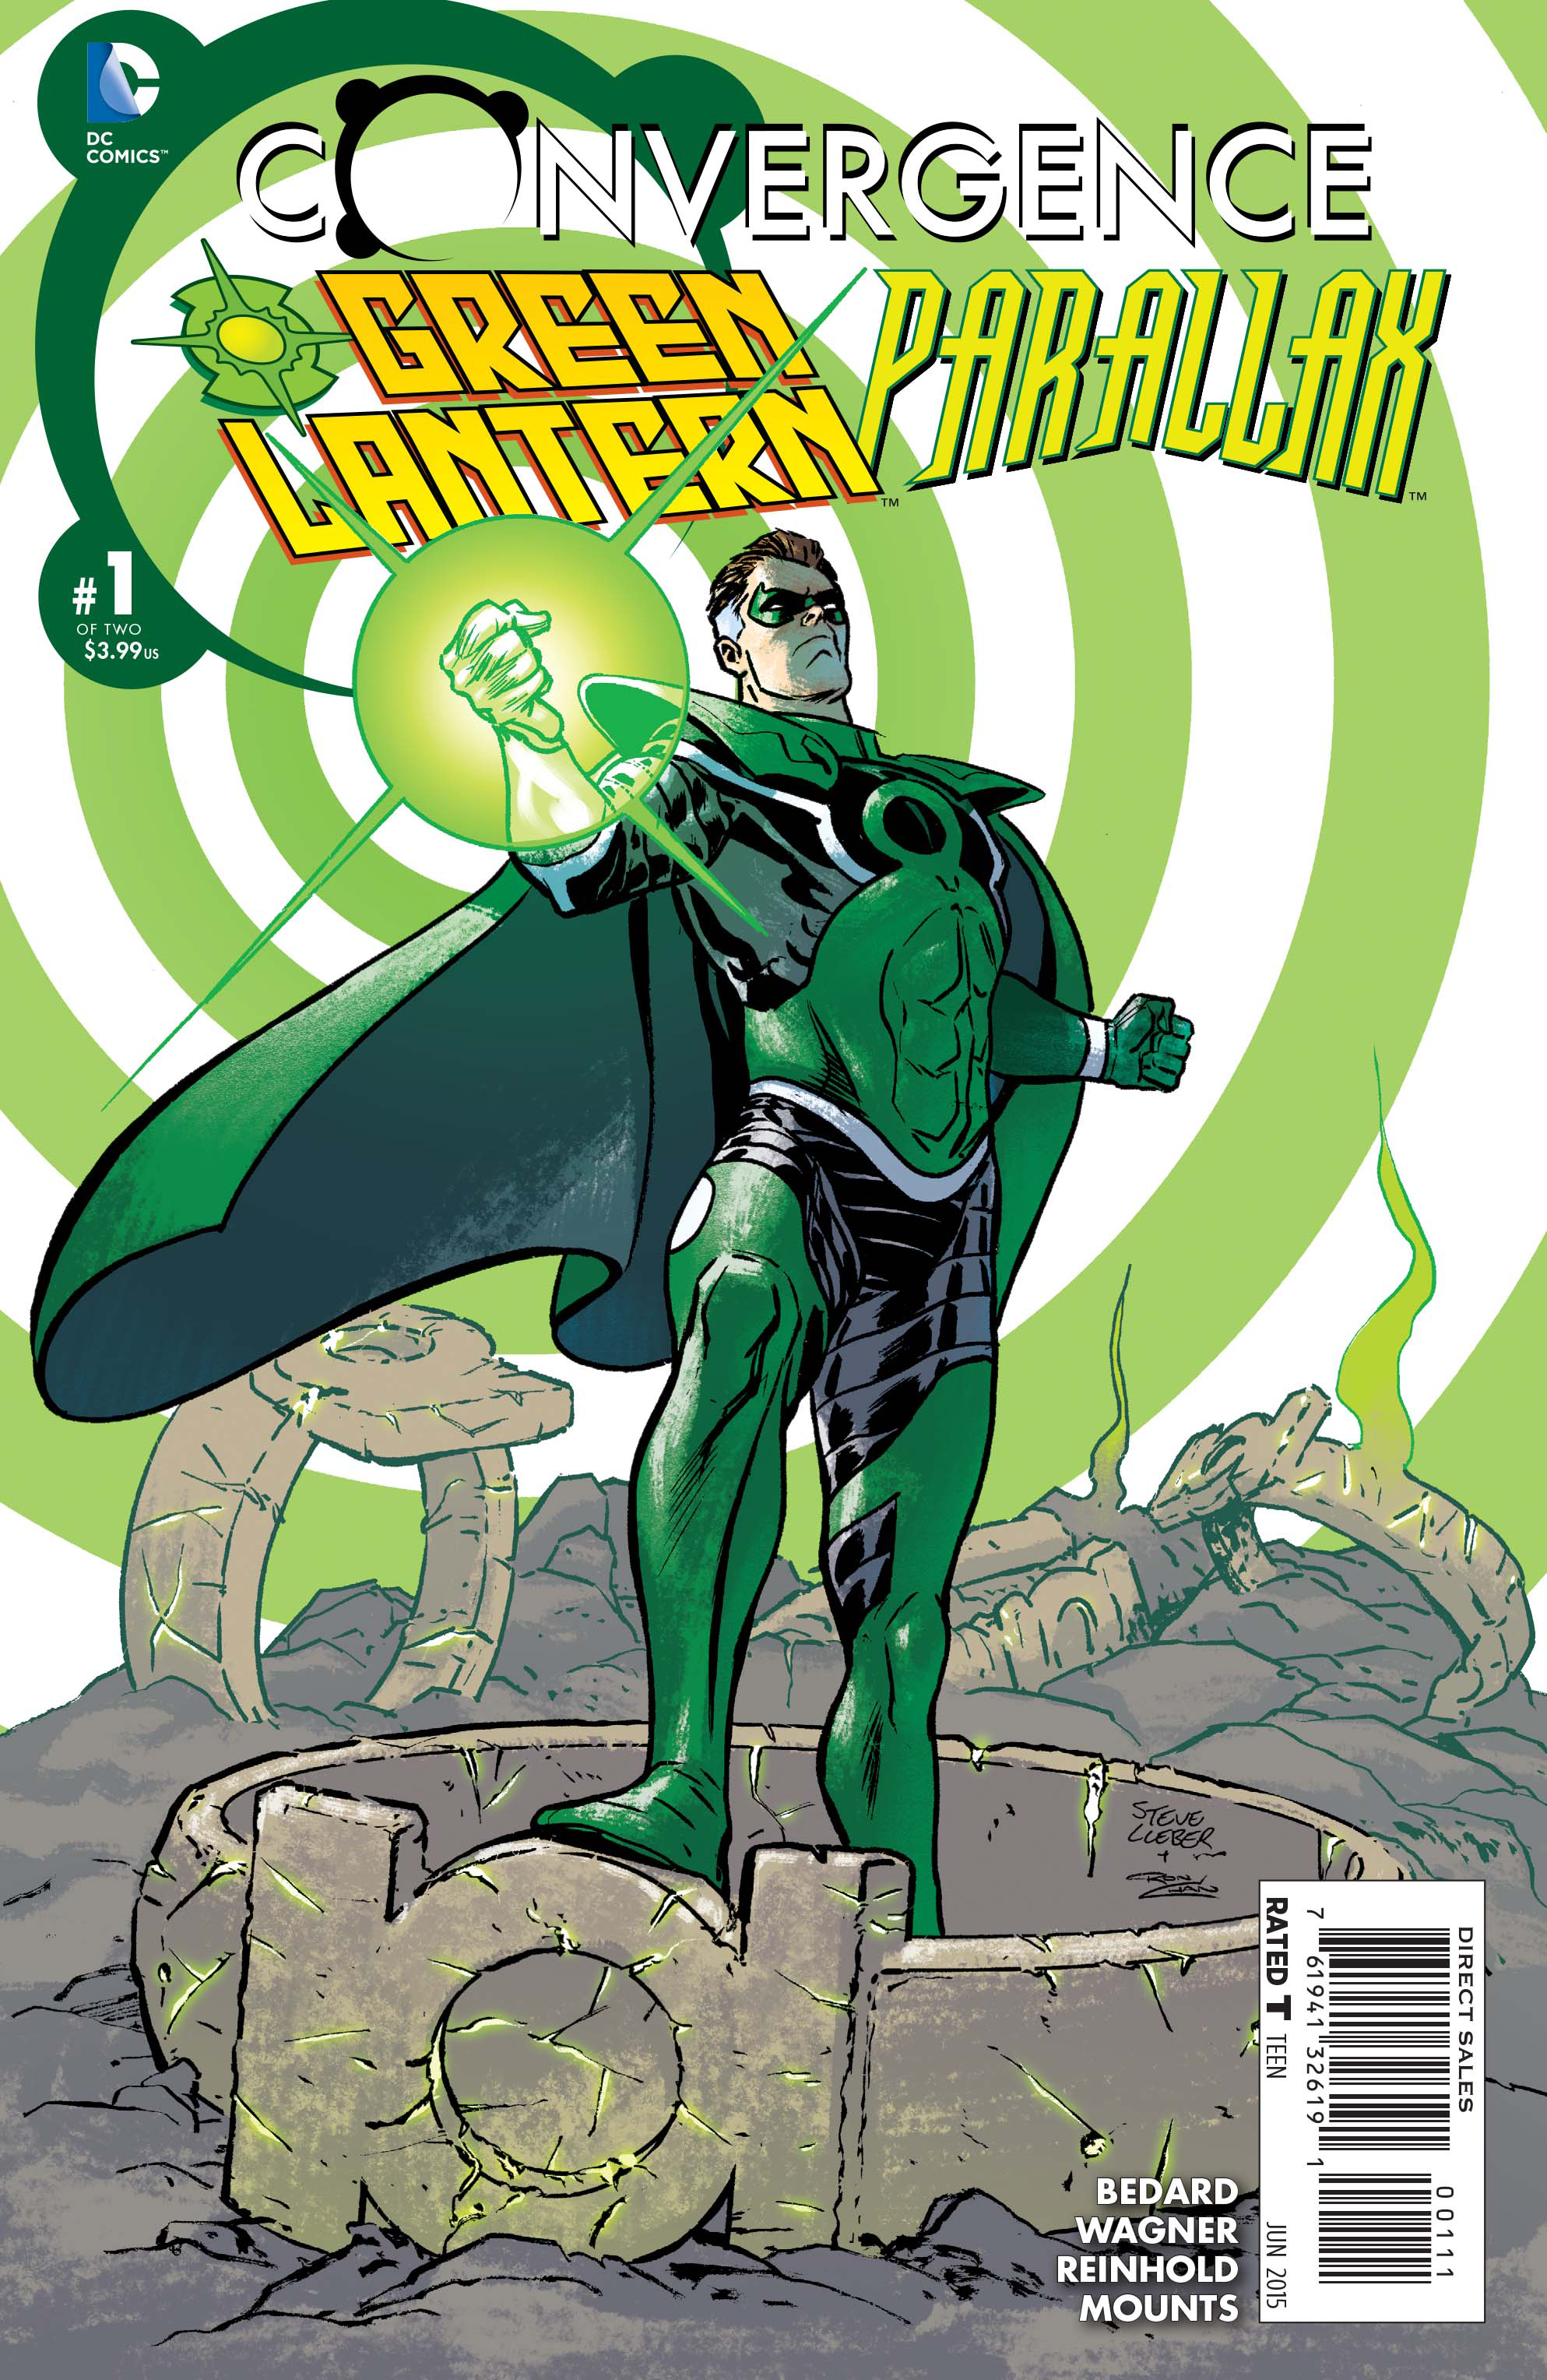 Green lantern parallax comic